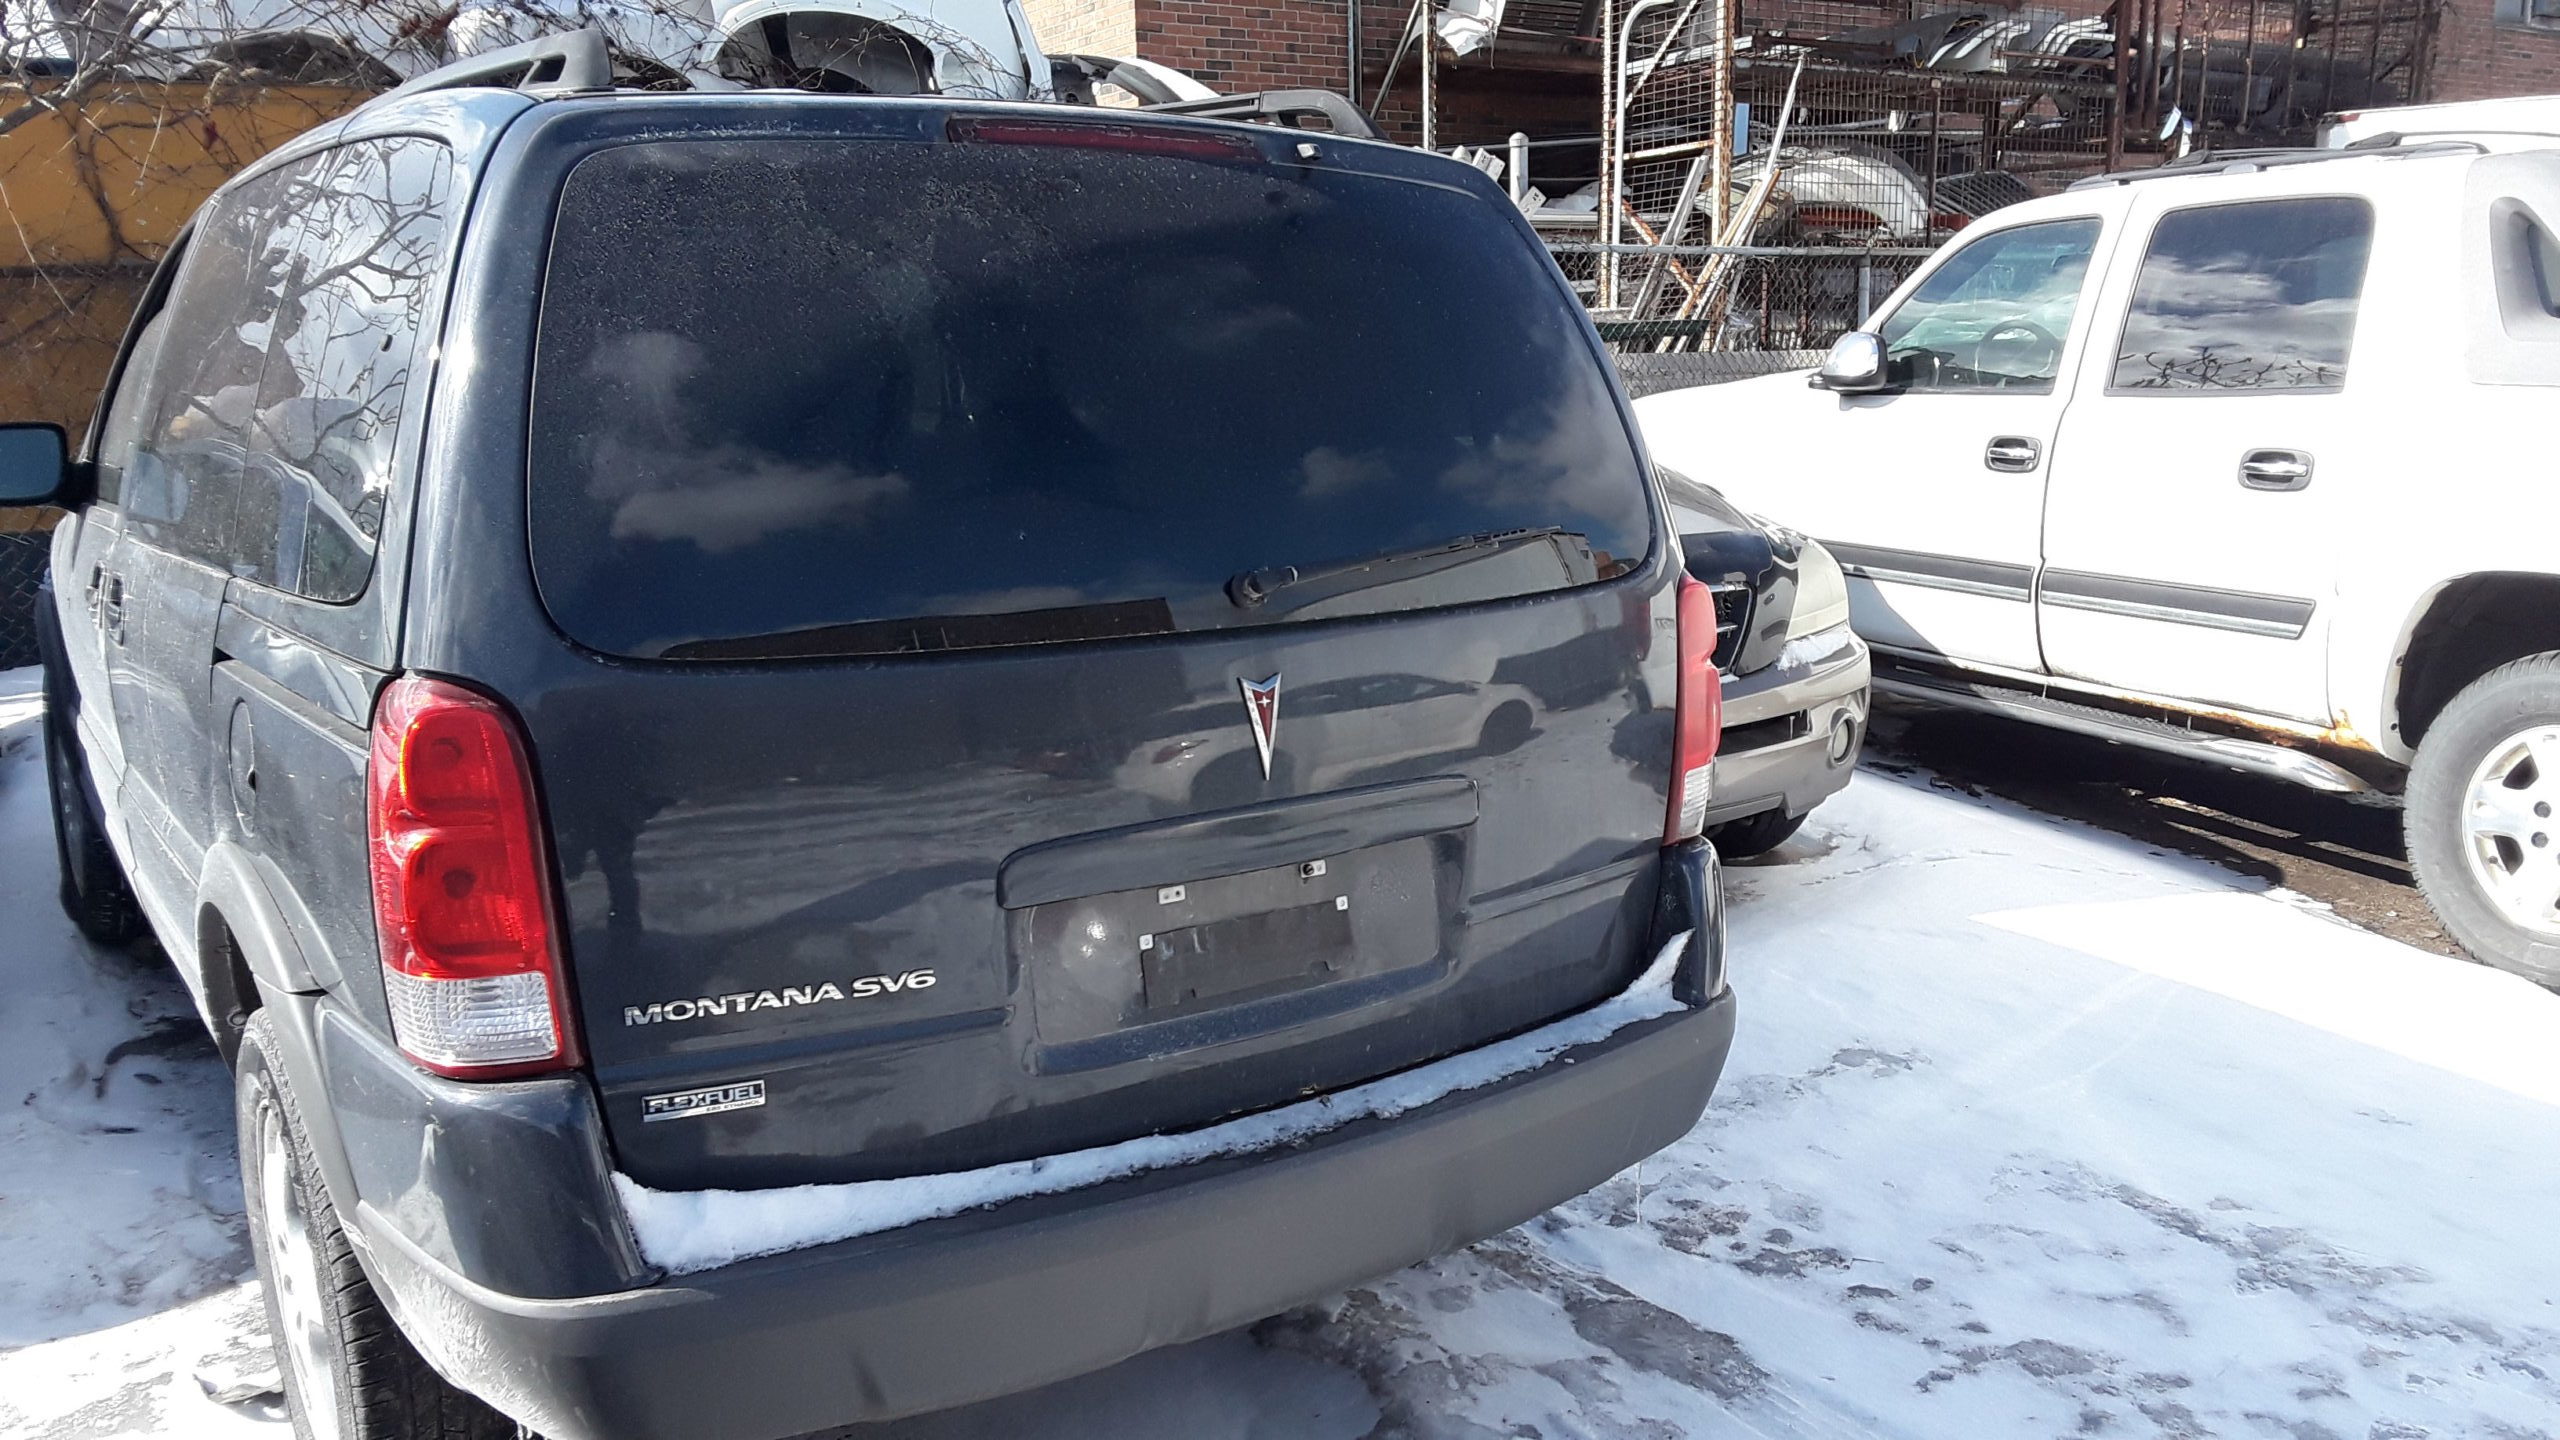 Pontiac Montana Scrap and Junk Car Removal